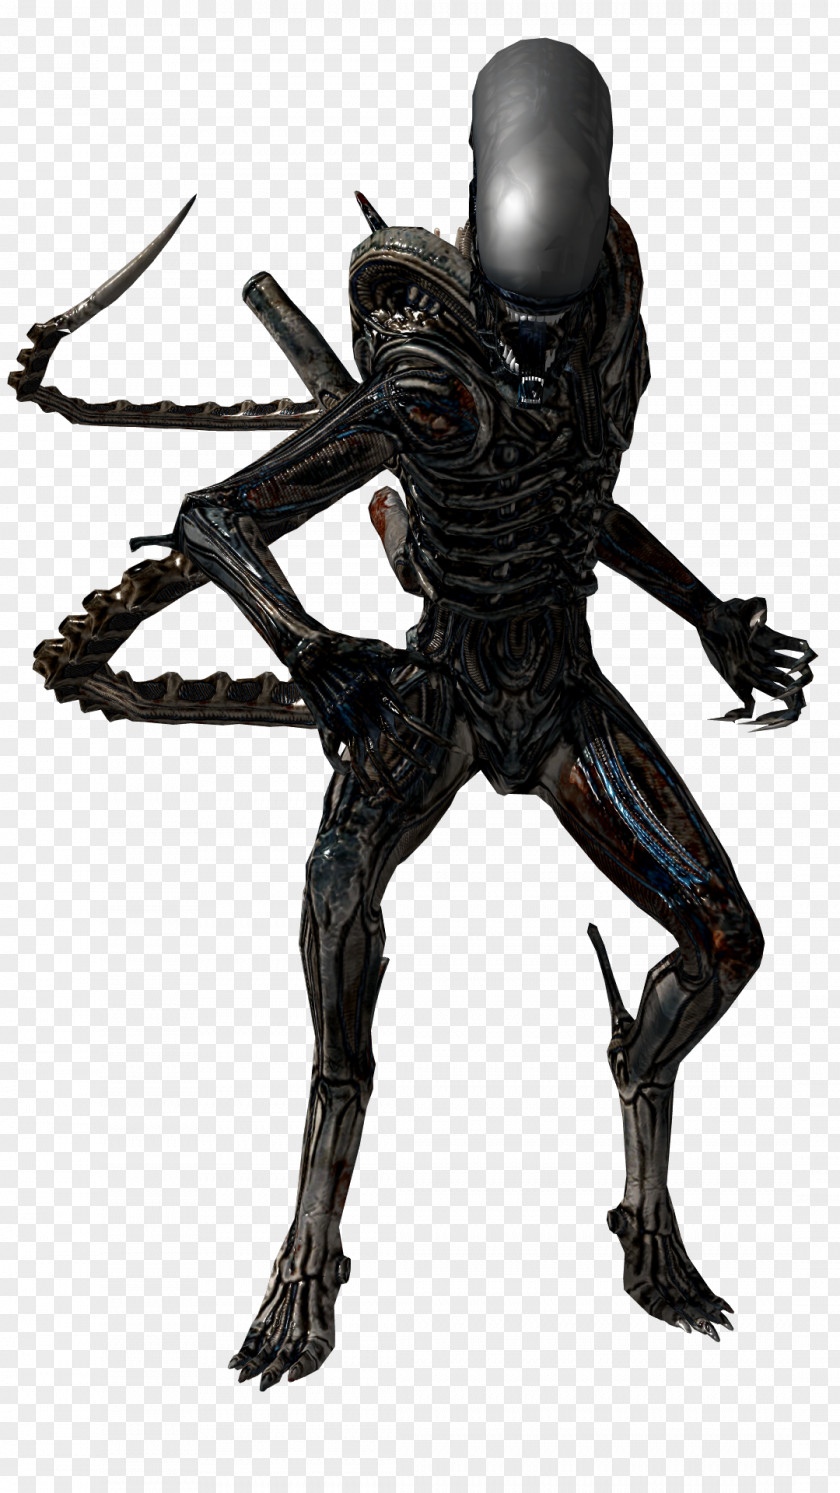 Alien Alien: Isolation Space Jockey Vs. Predator PNG